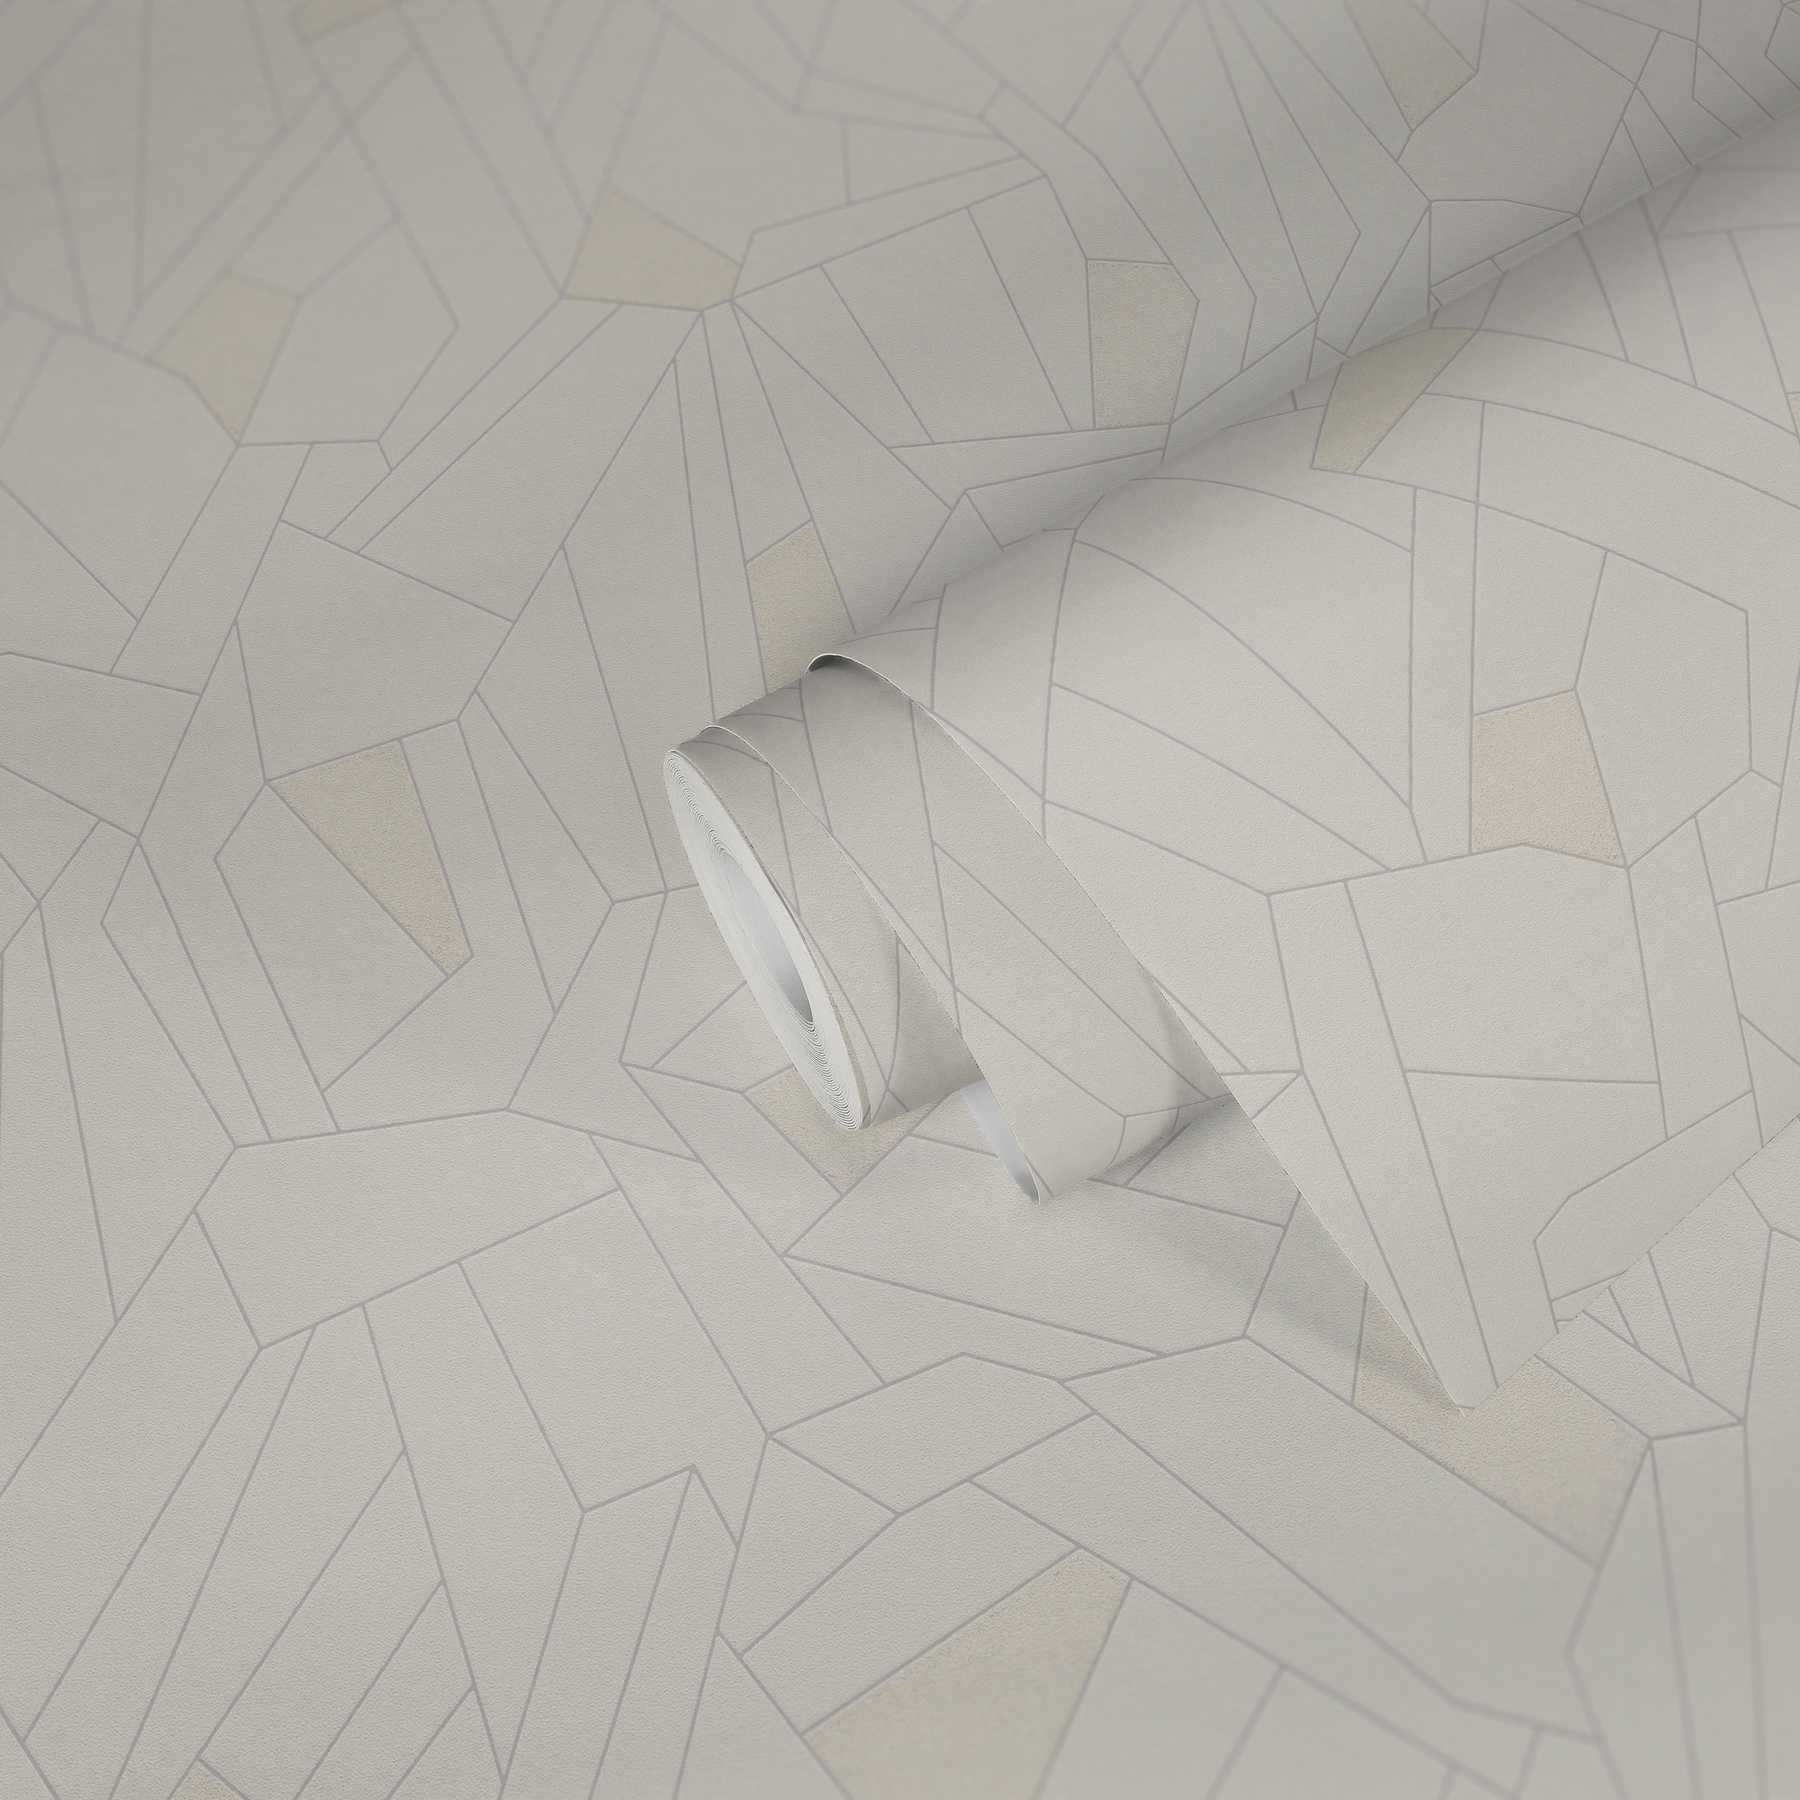             Non-woven wallpaper lines & glitter effect - cream, beige, grey
        